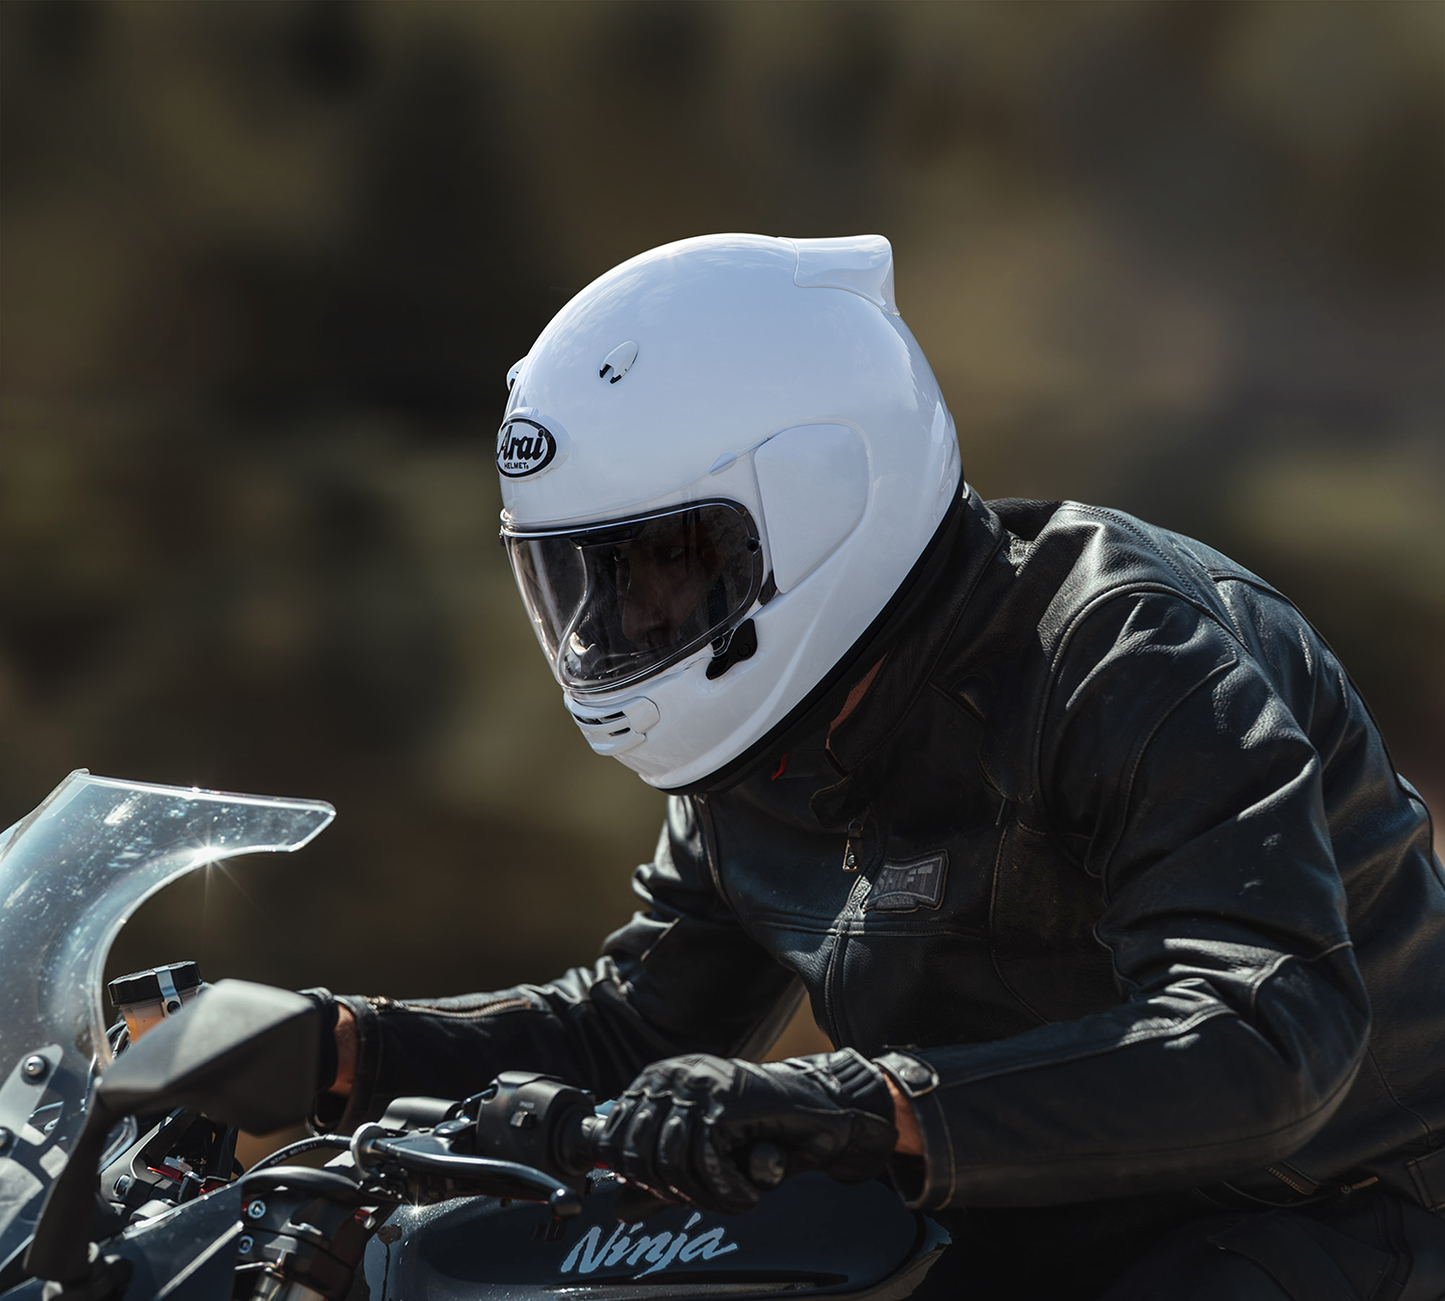 ARAI HELMETS Contour-X Helmet - Solid - Diamond White - 2XL 0101-16036